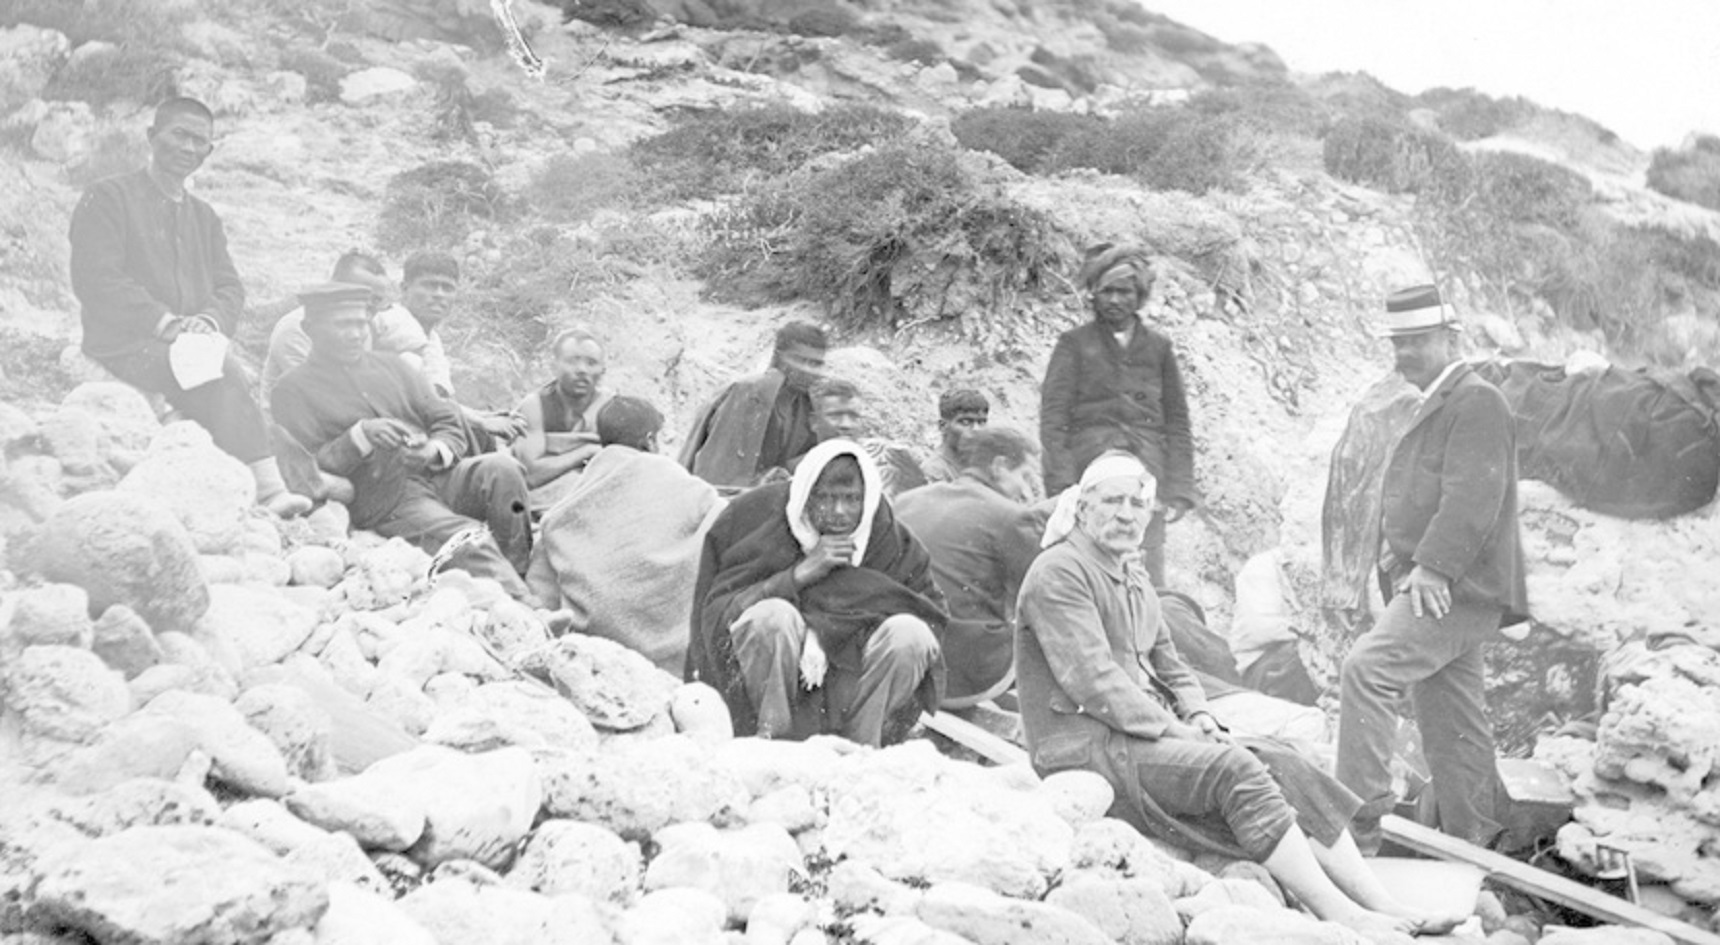 An old image of shipwreck survivors sitting on rocks.